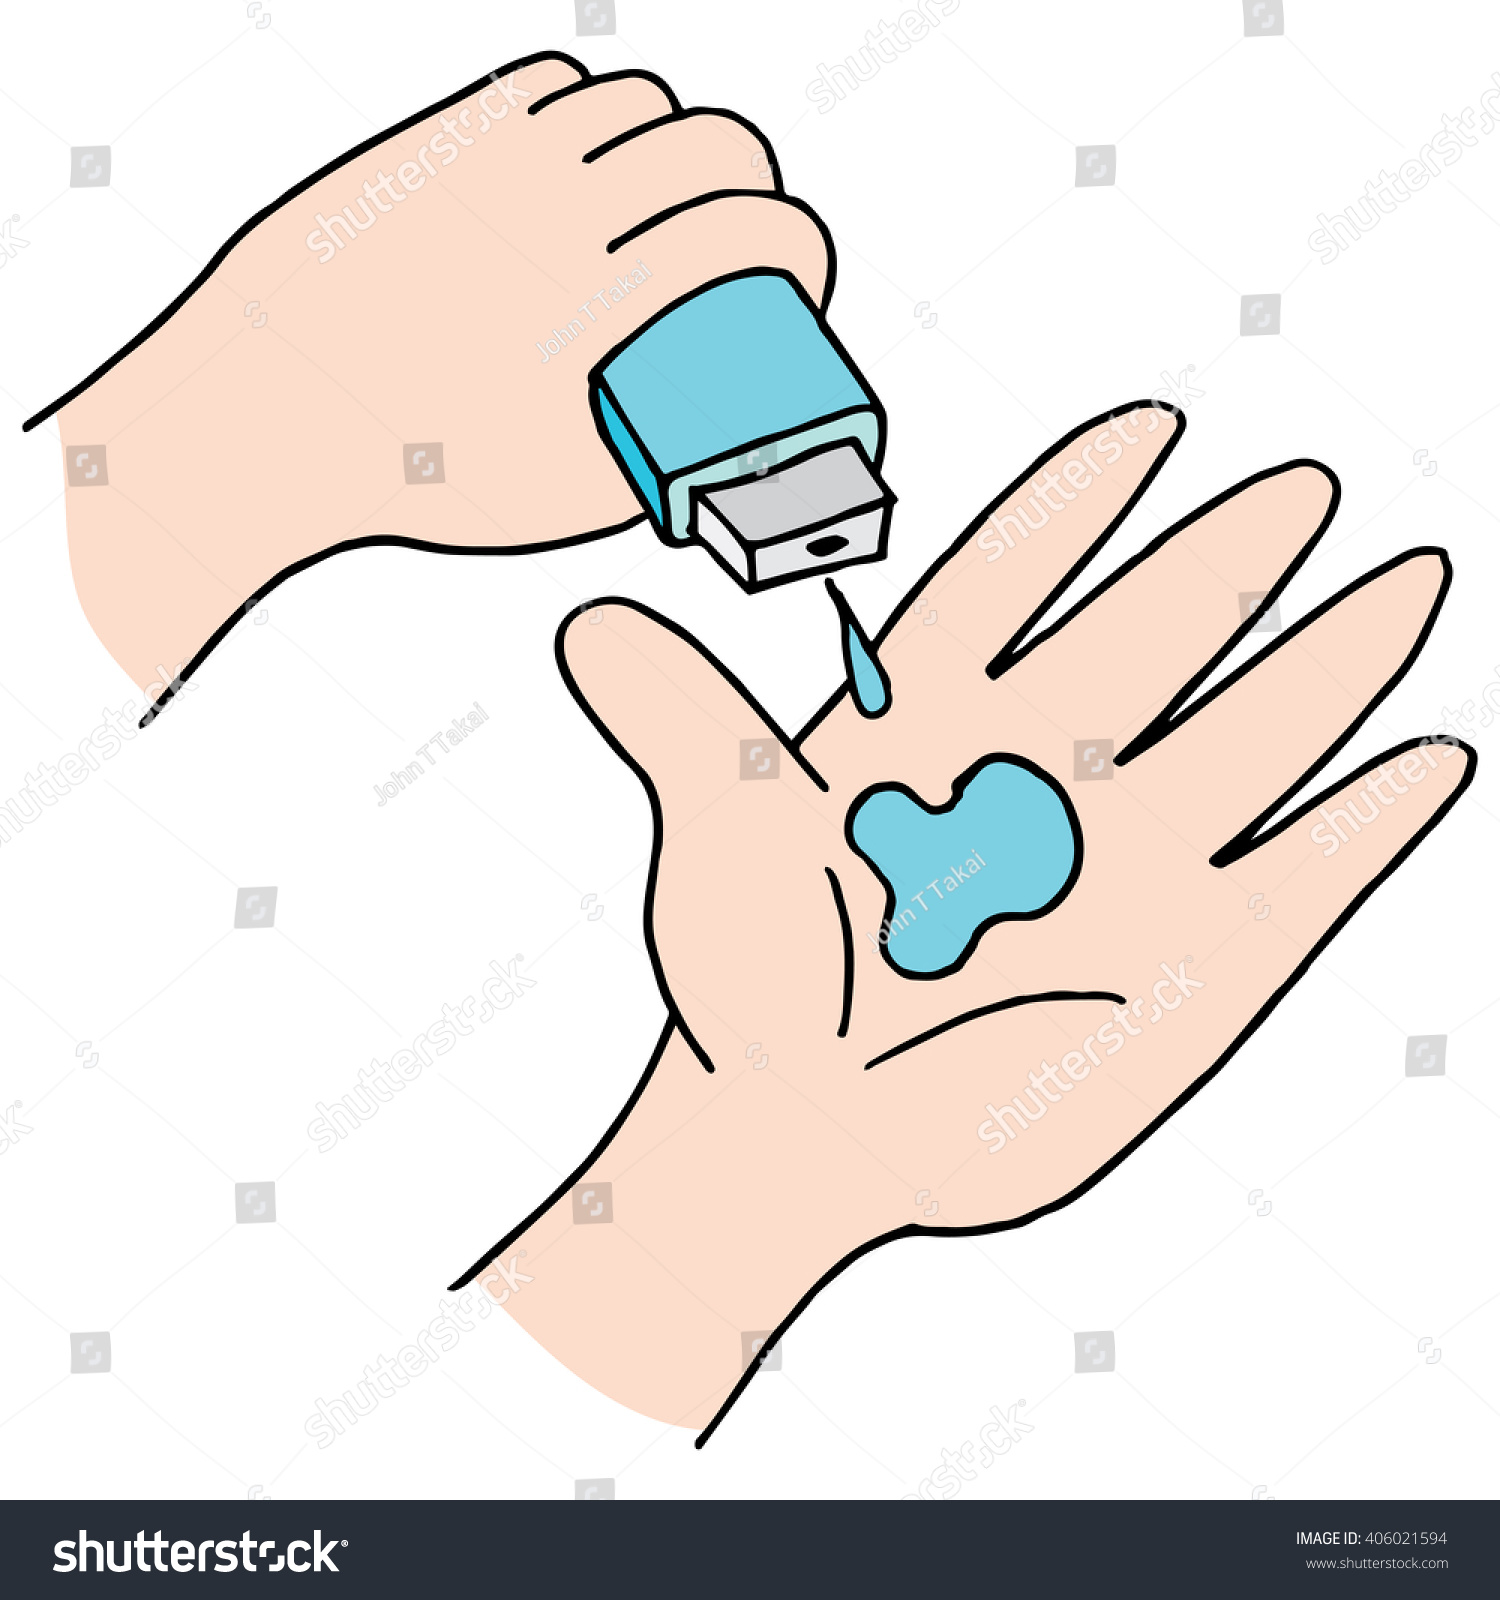 An Image Of Hand Sanitizer. Stock Vector 406021594 : Shutterstock